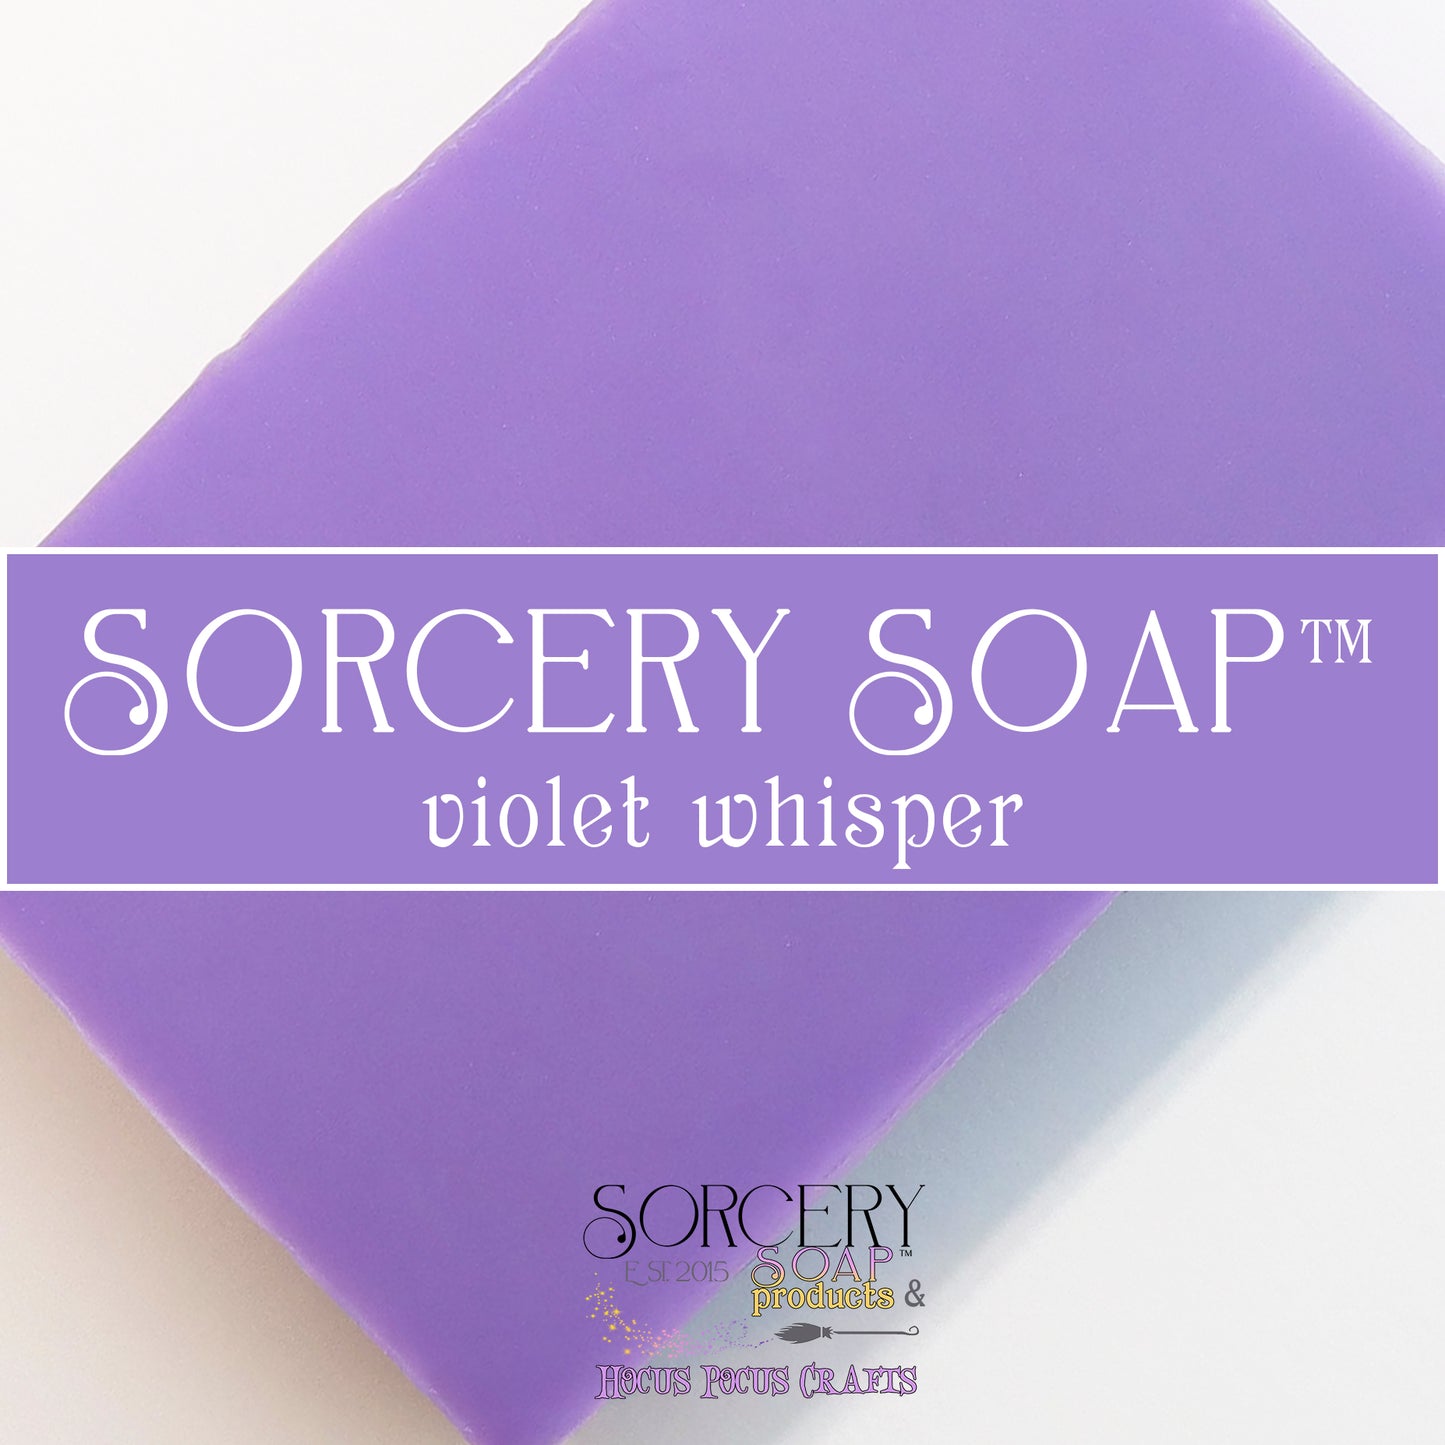 Purple Soap Dough